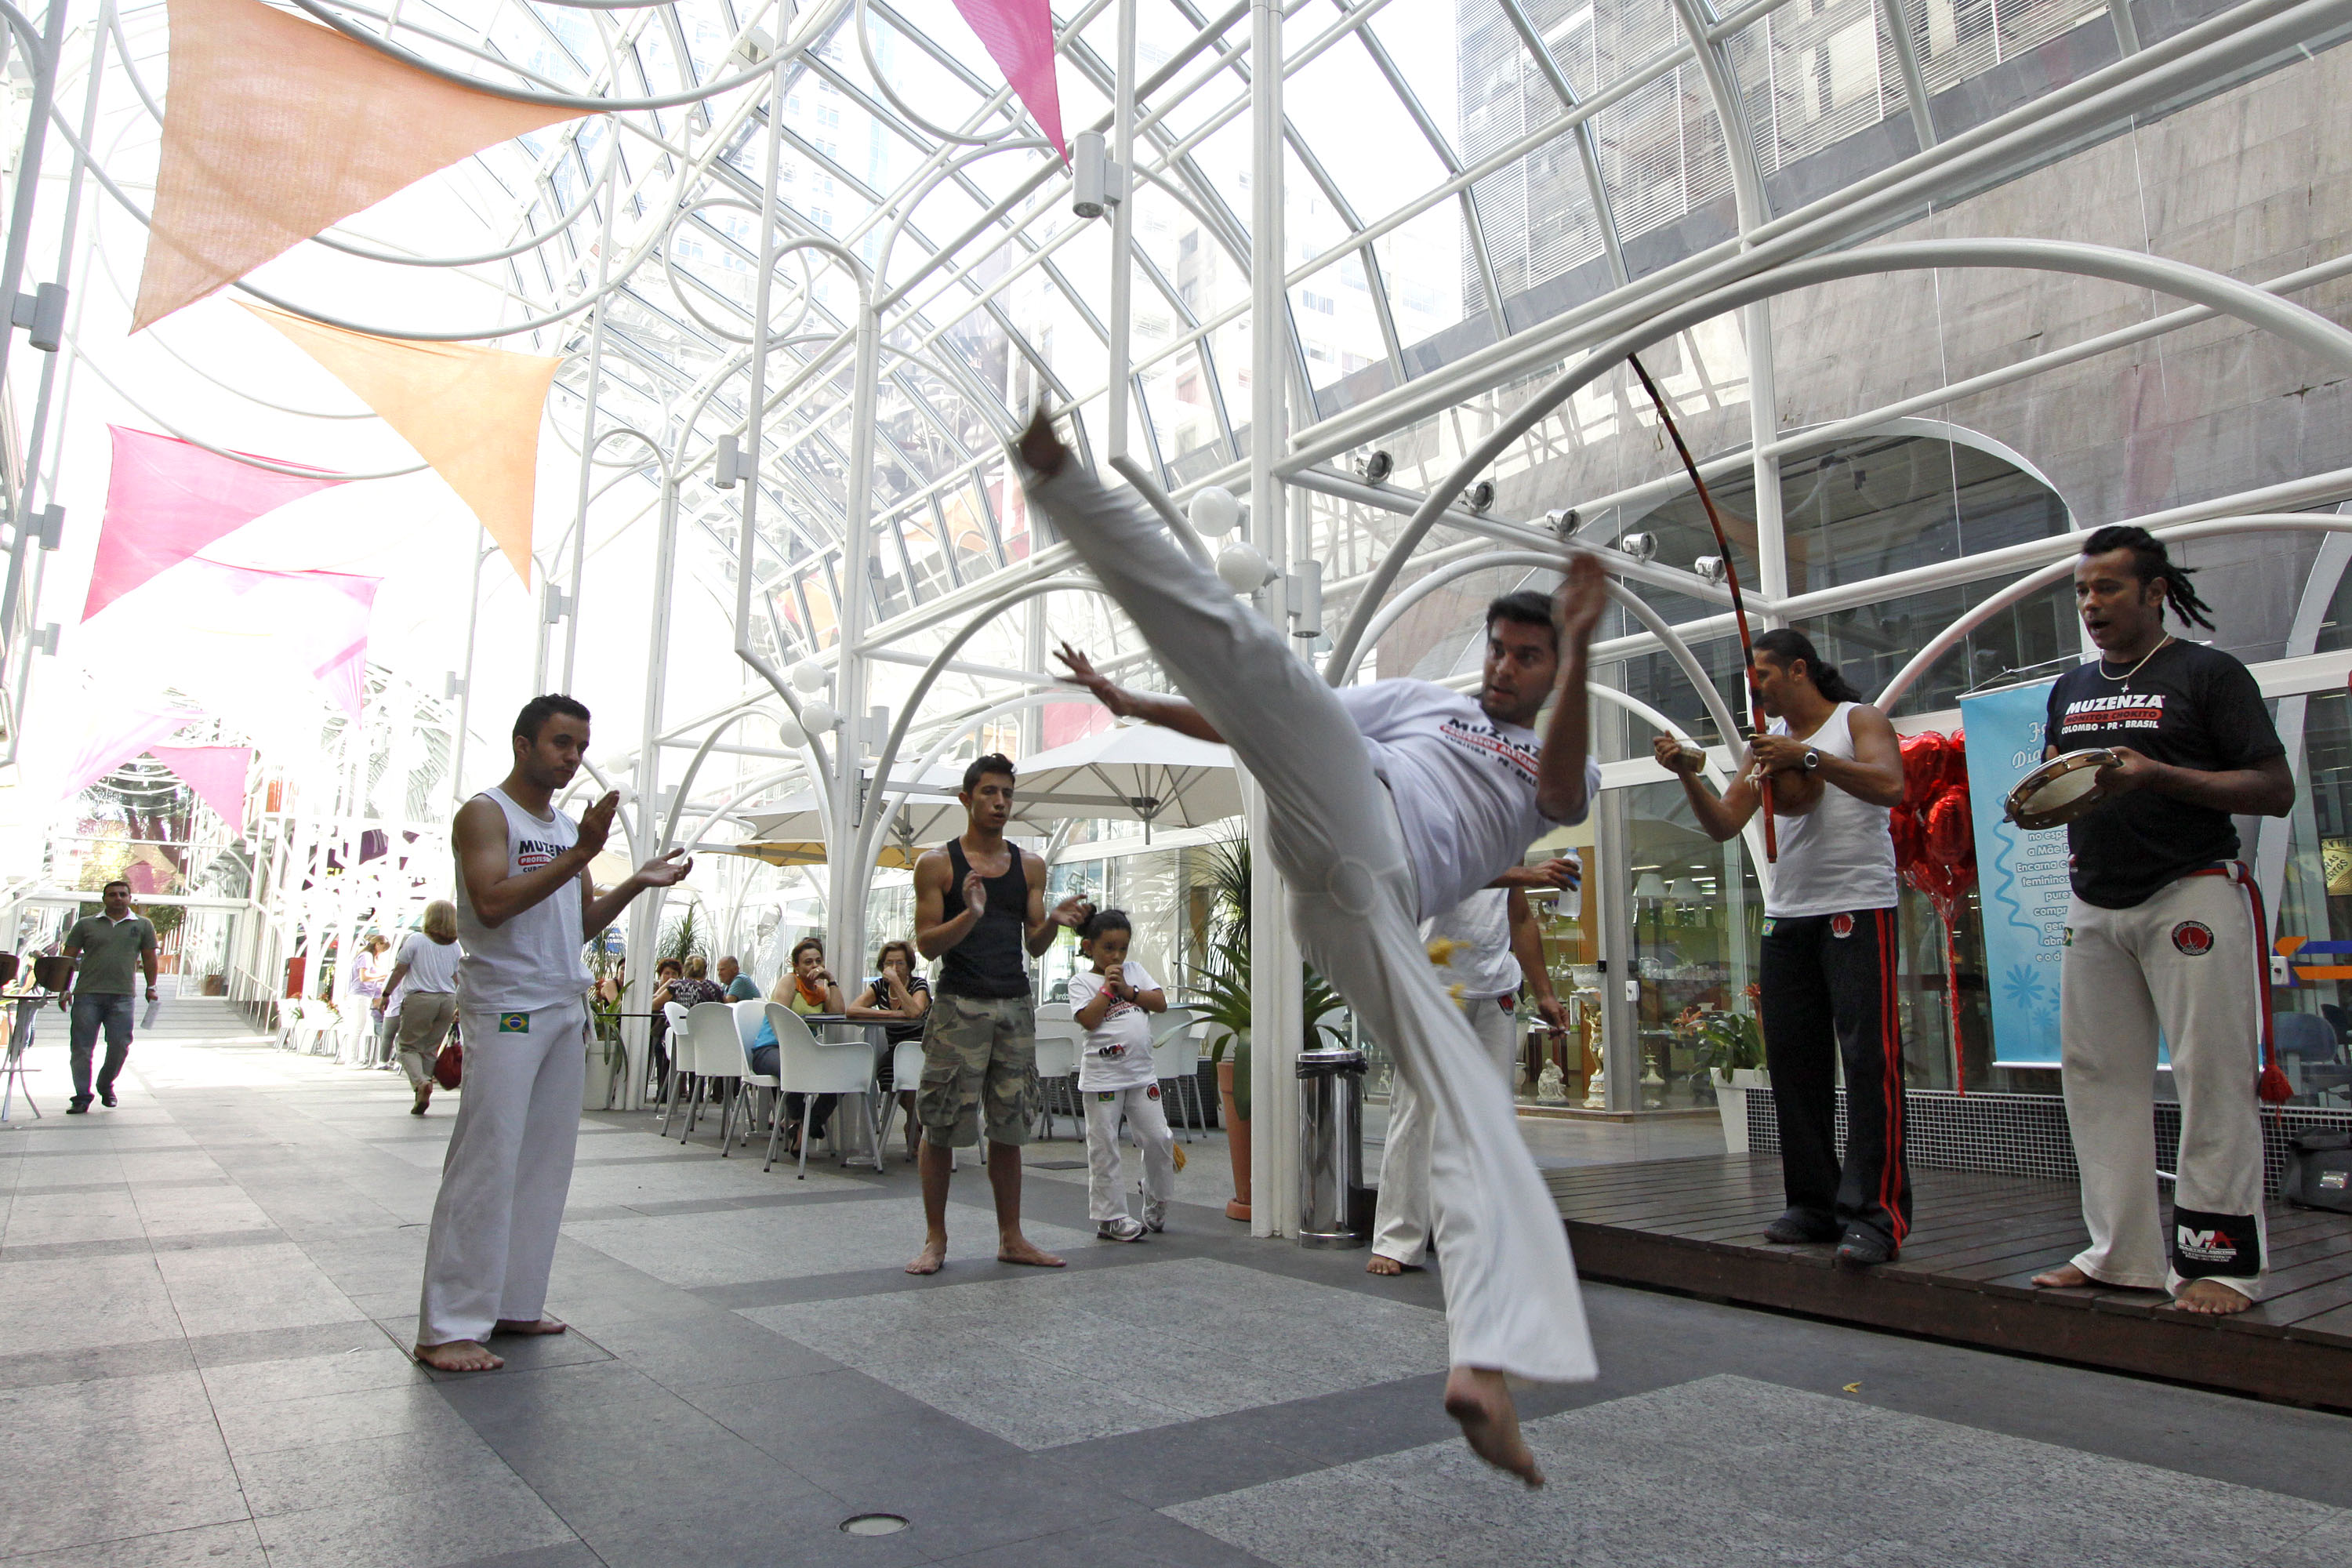 Abadá Capoeira Jogos Femininos 2012